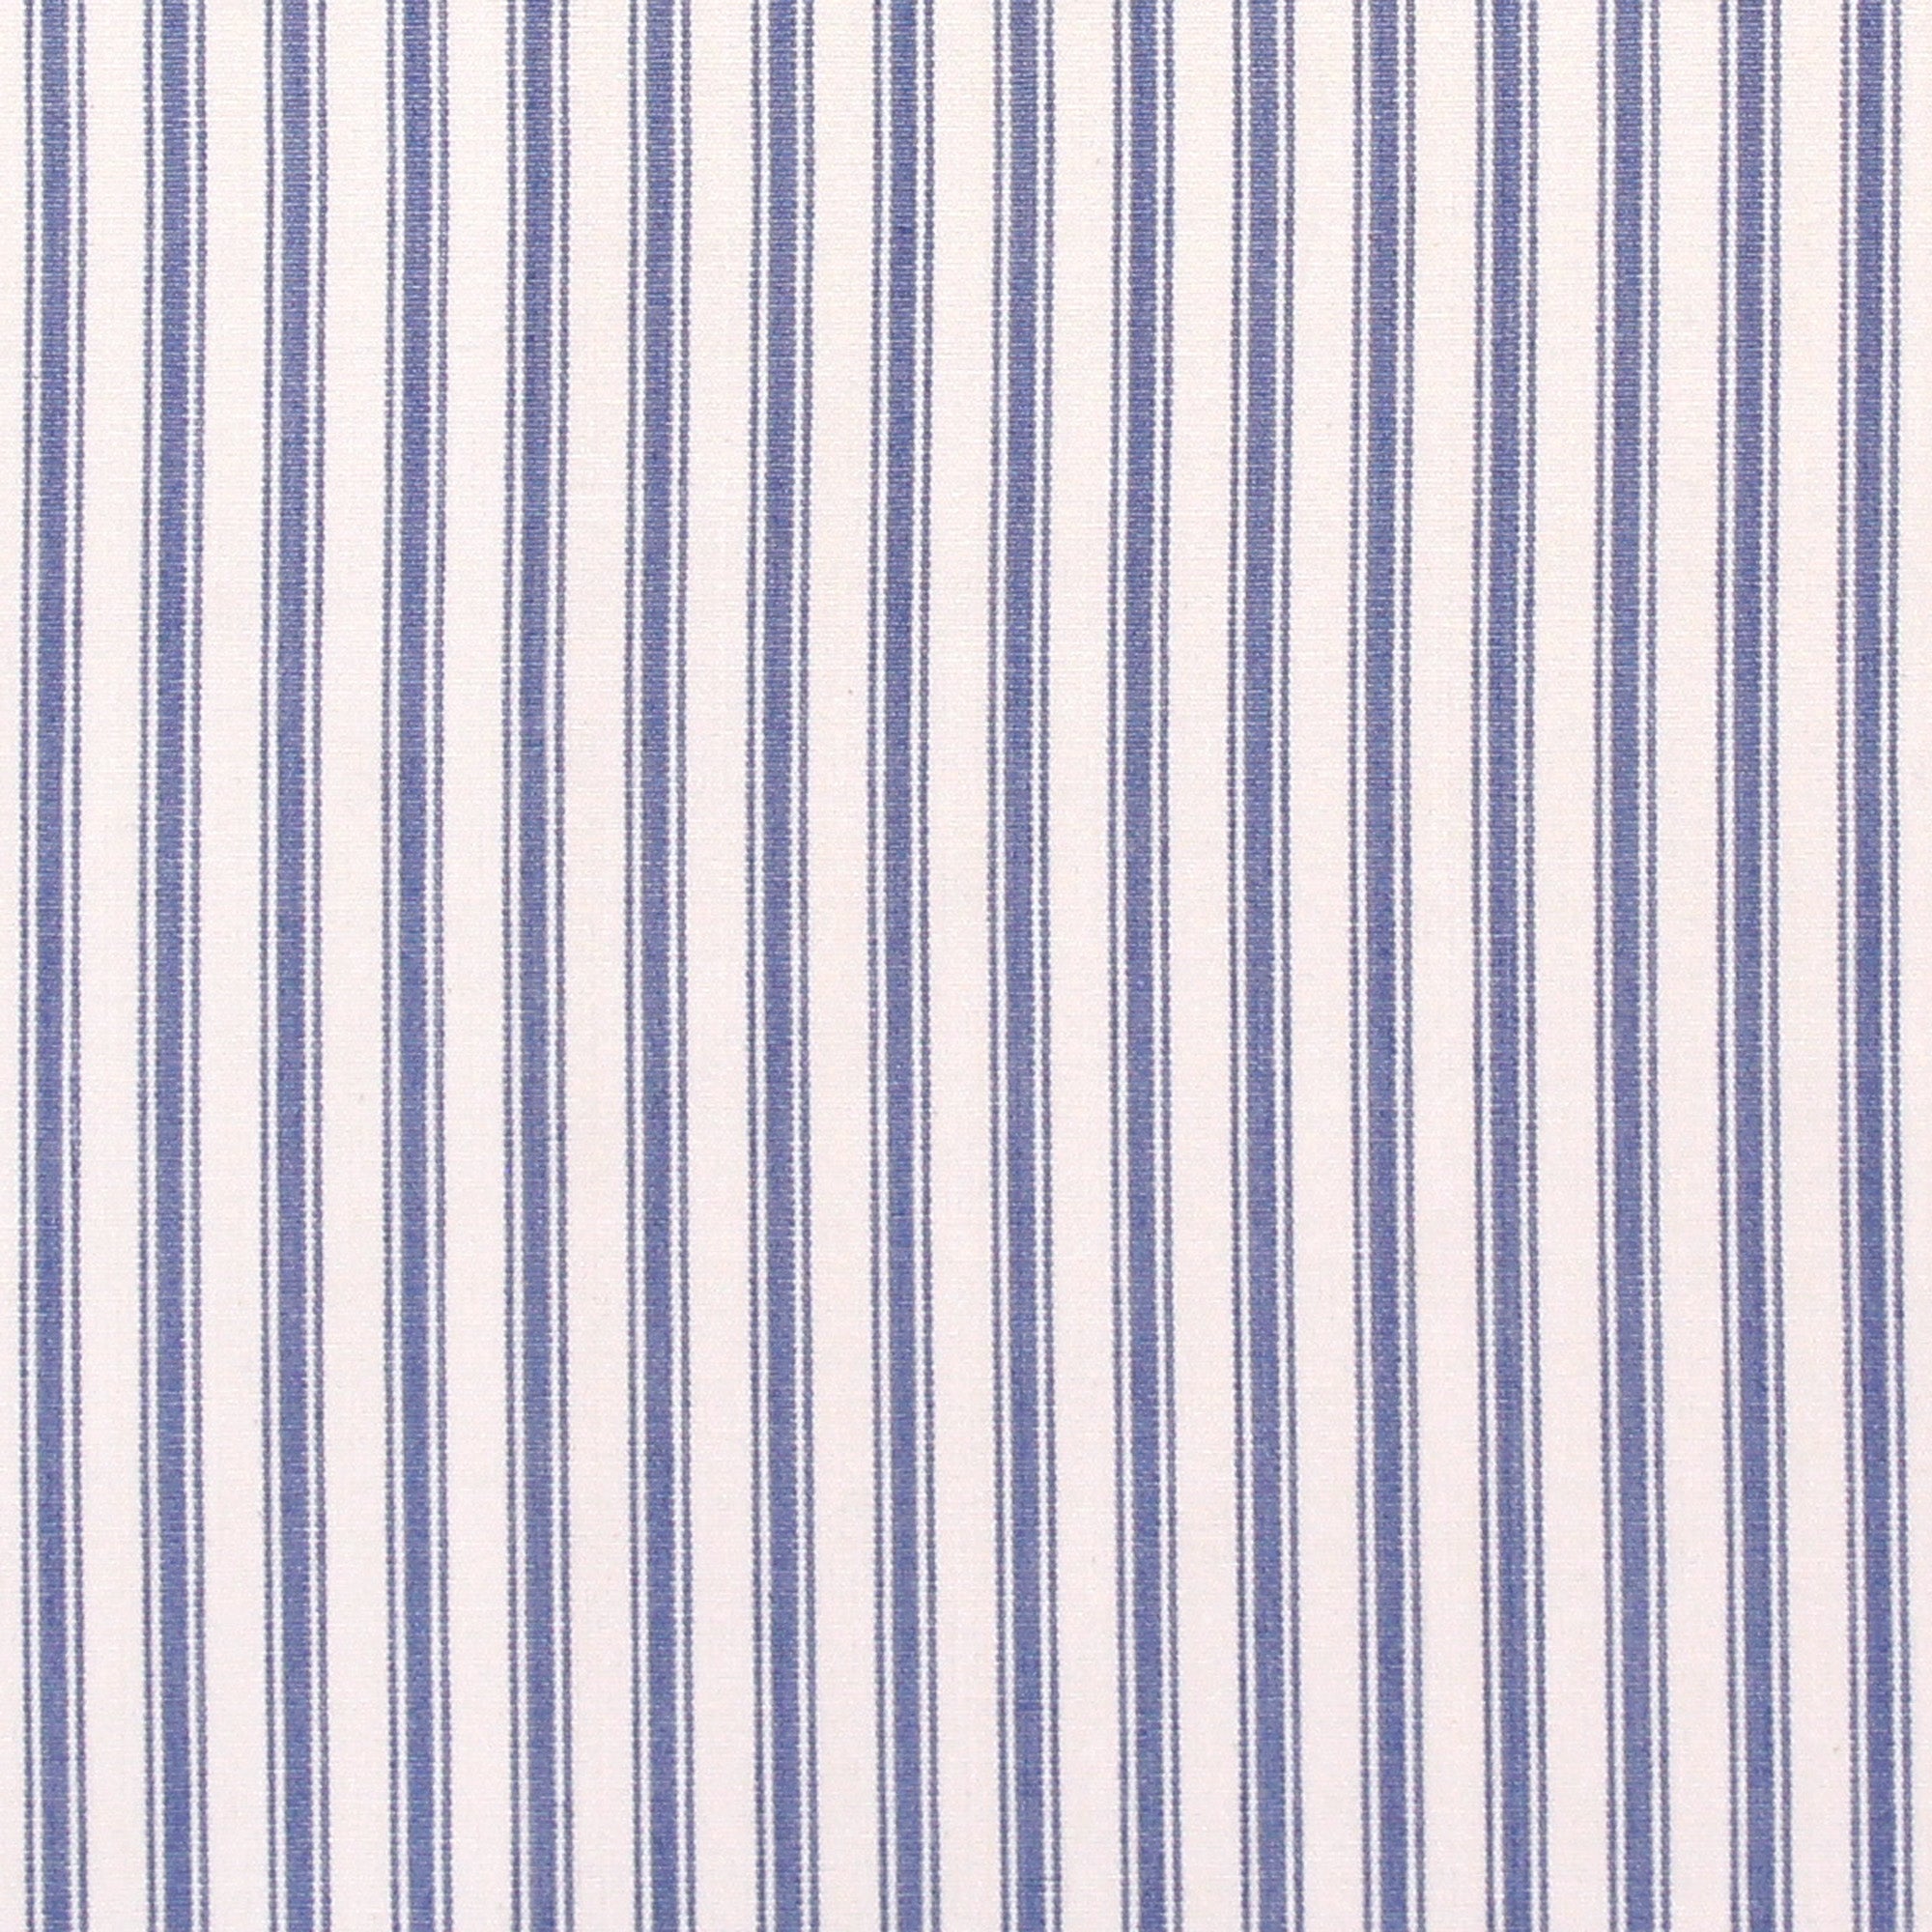 Parish Stripe Fabric in Baltic Blue Cotton Ticking Piece 6